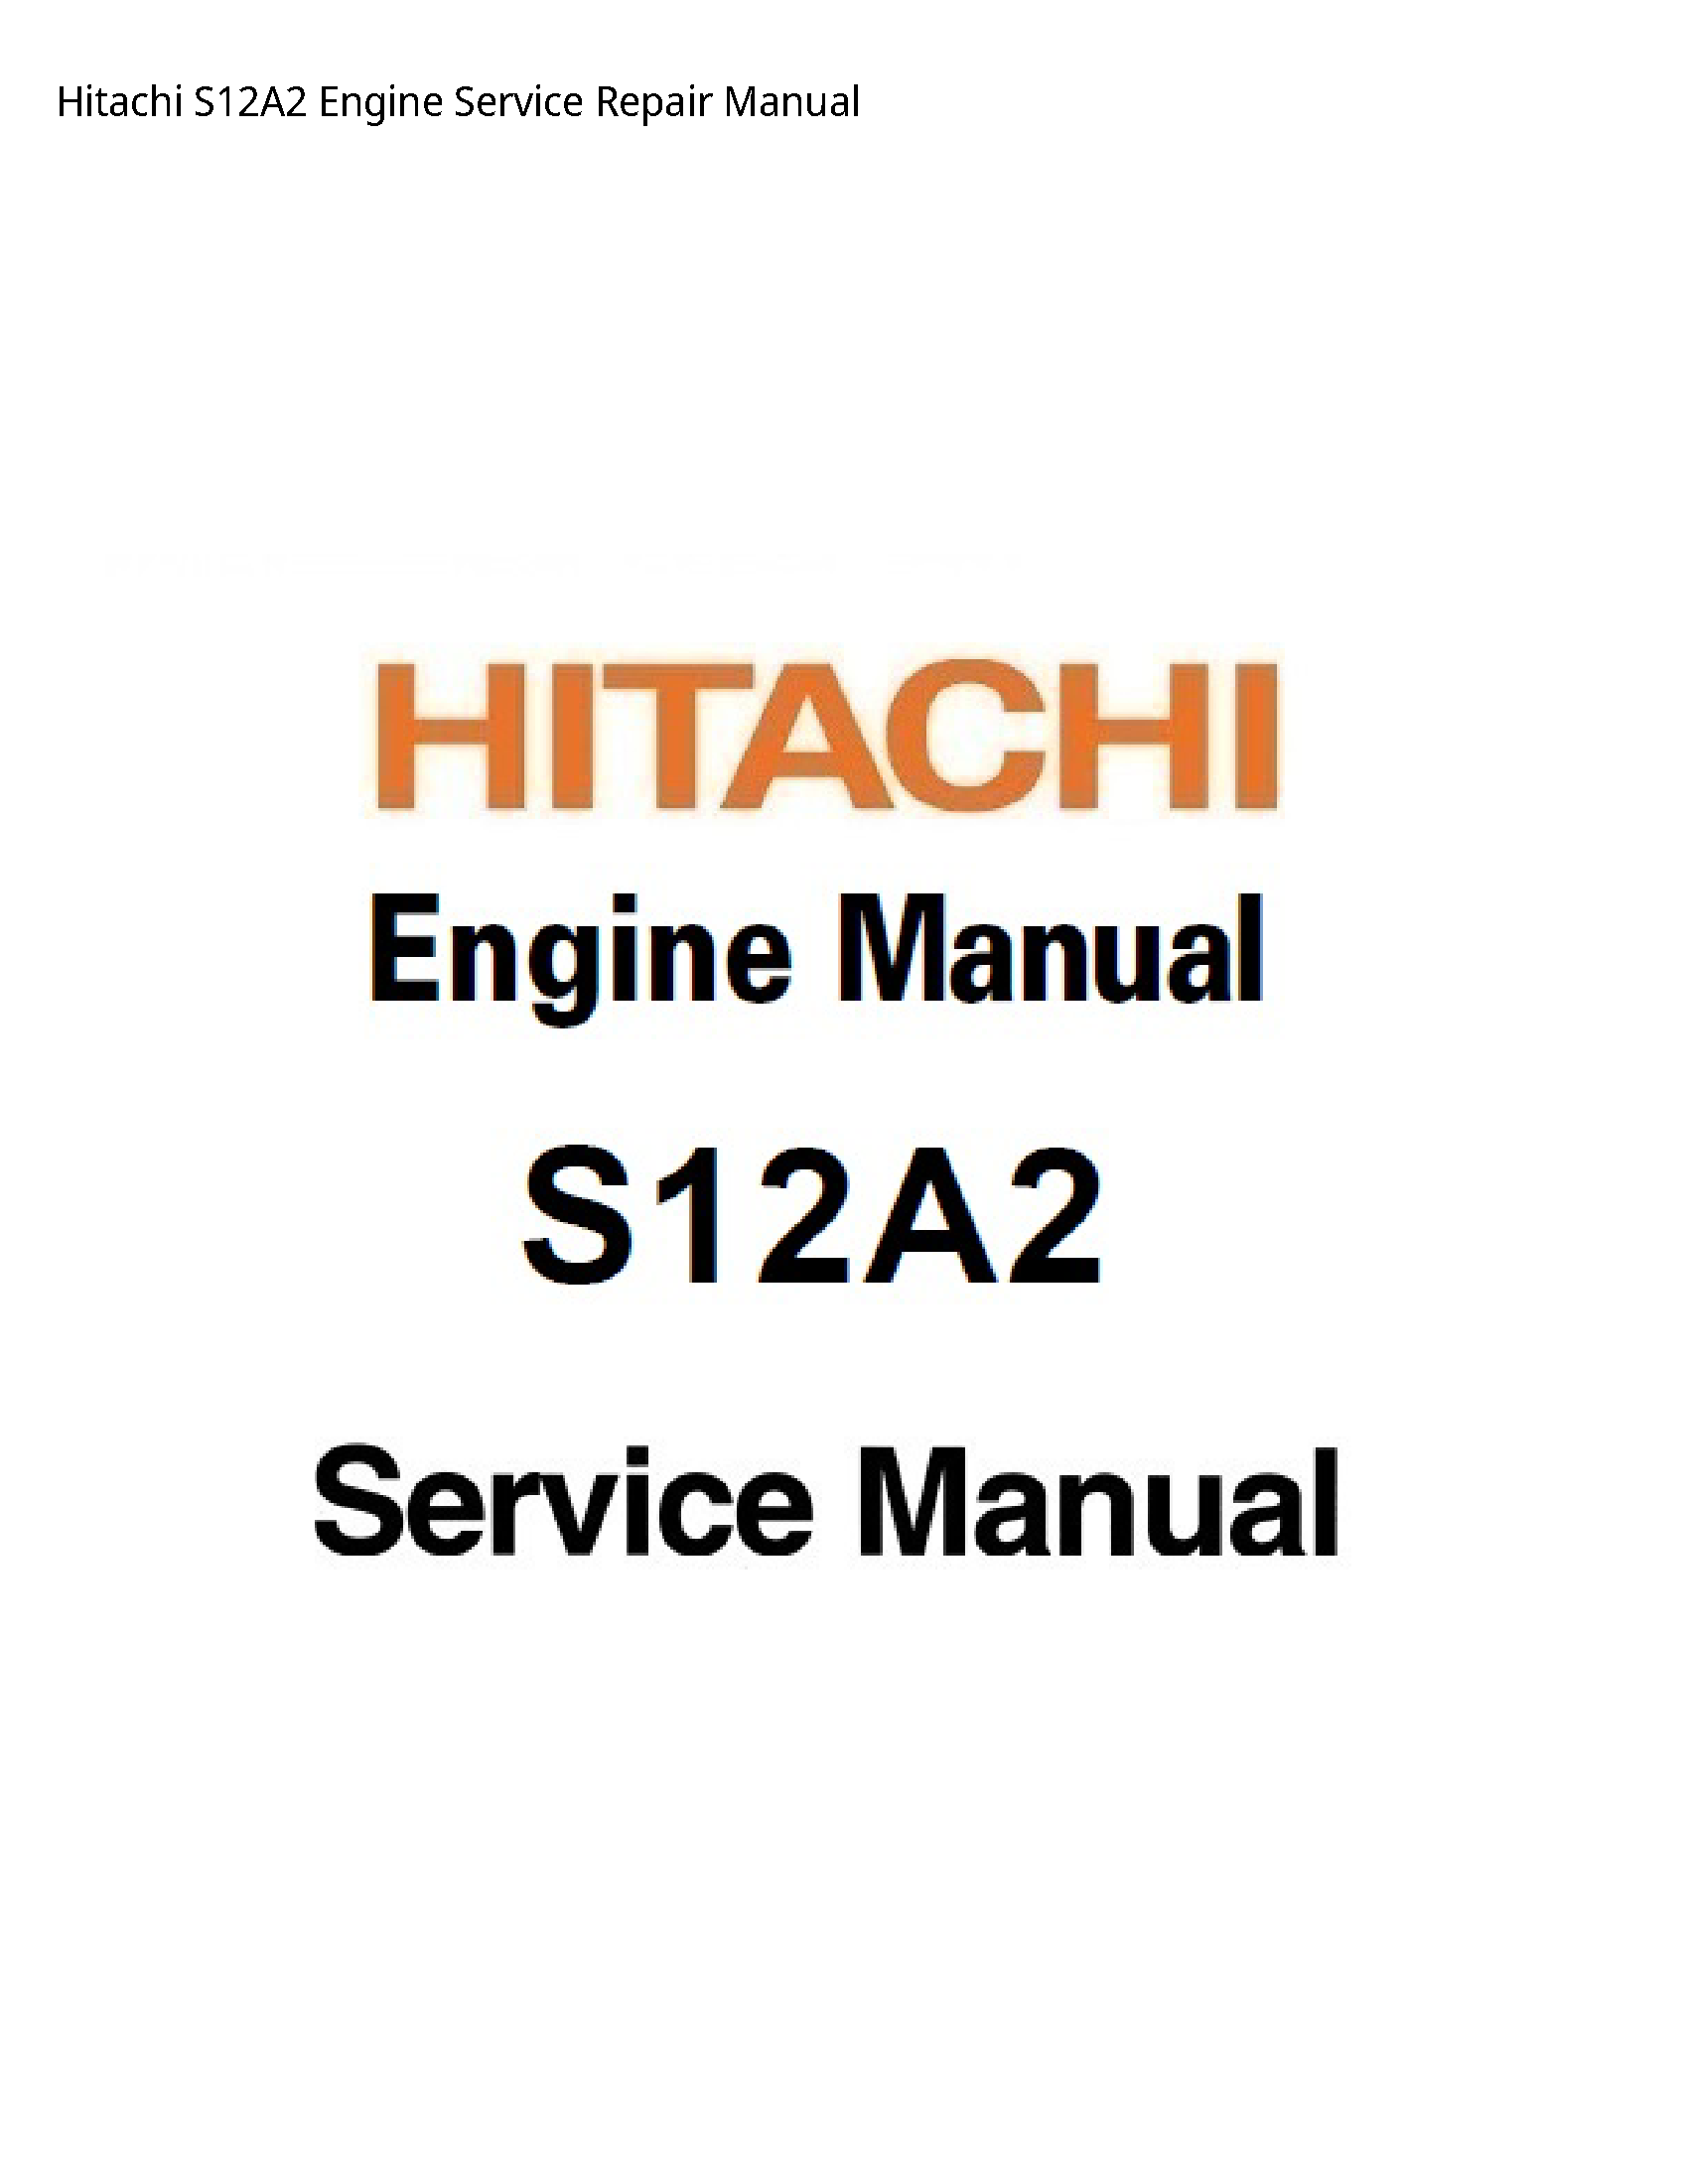 Hitachi S12A2 Engine manual